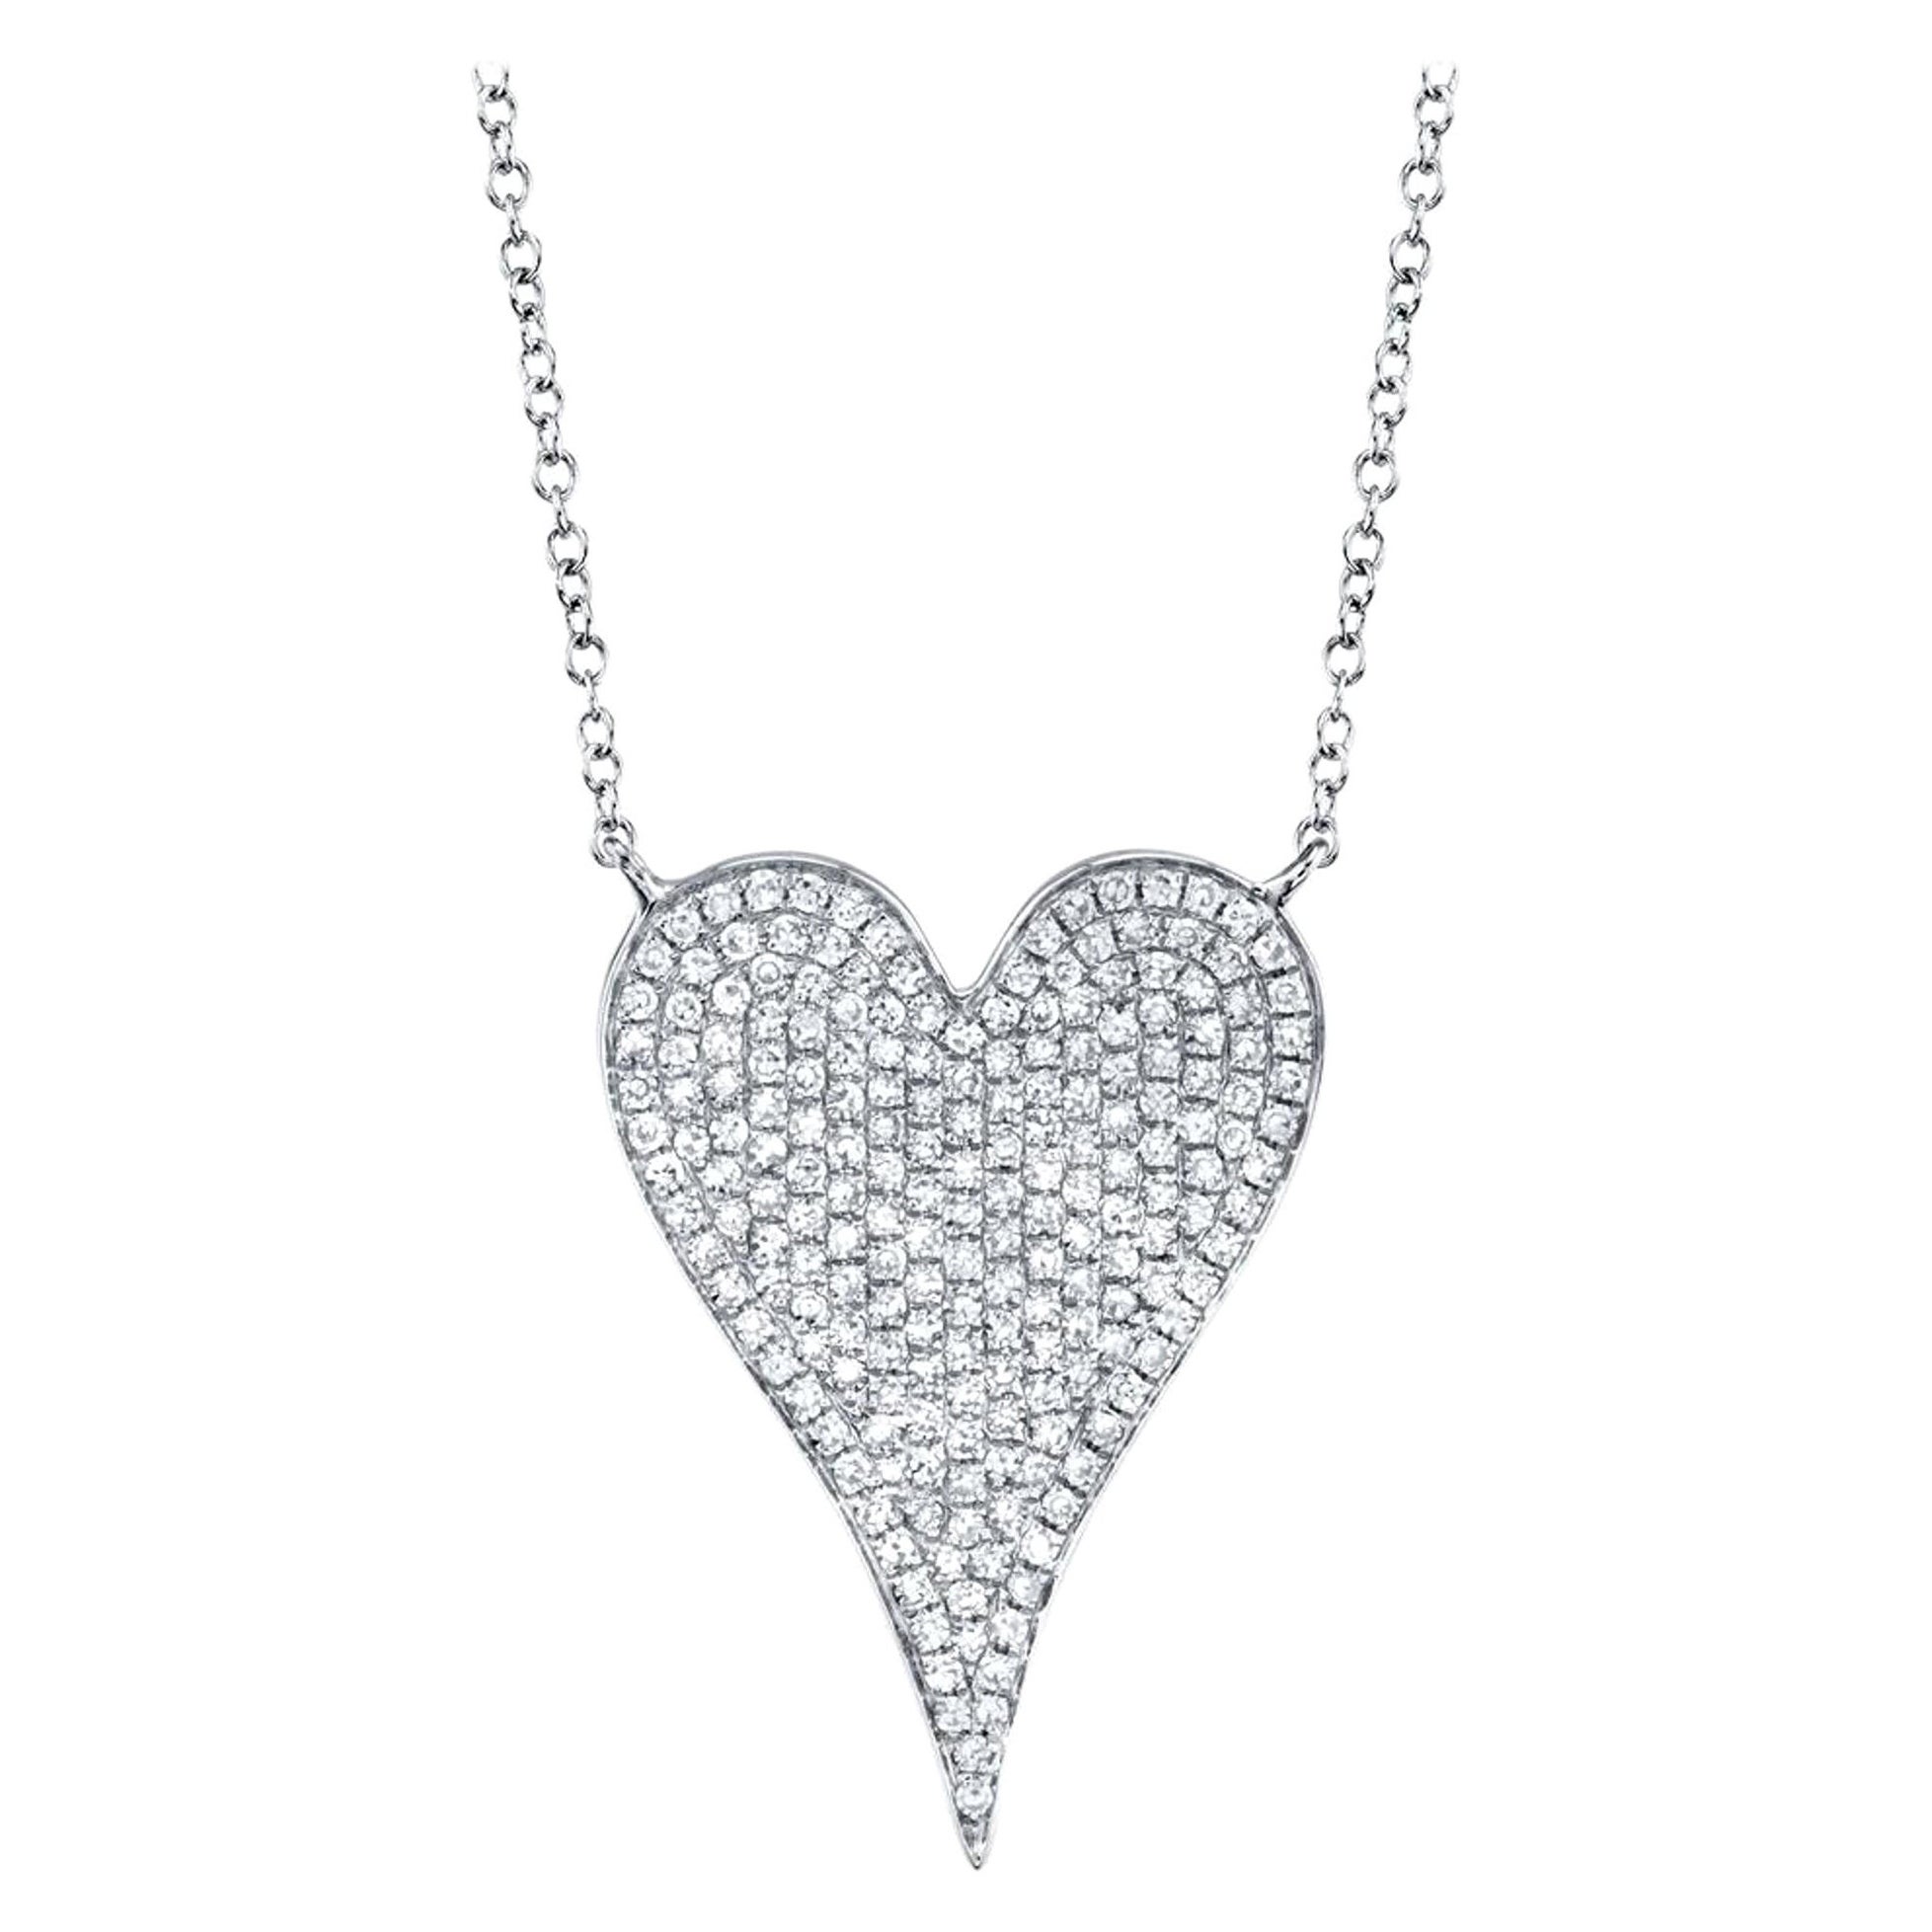 Rachel Koen Pave Diamond Heart Pendant Necklace 14K White Gold 0.43cttw